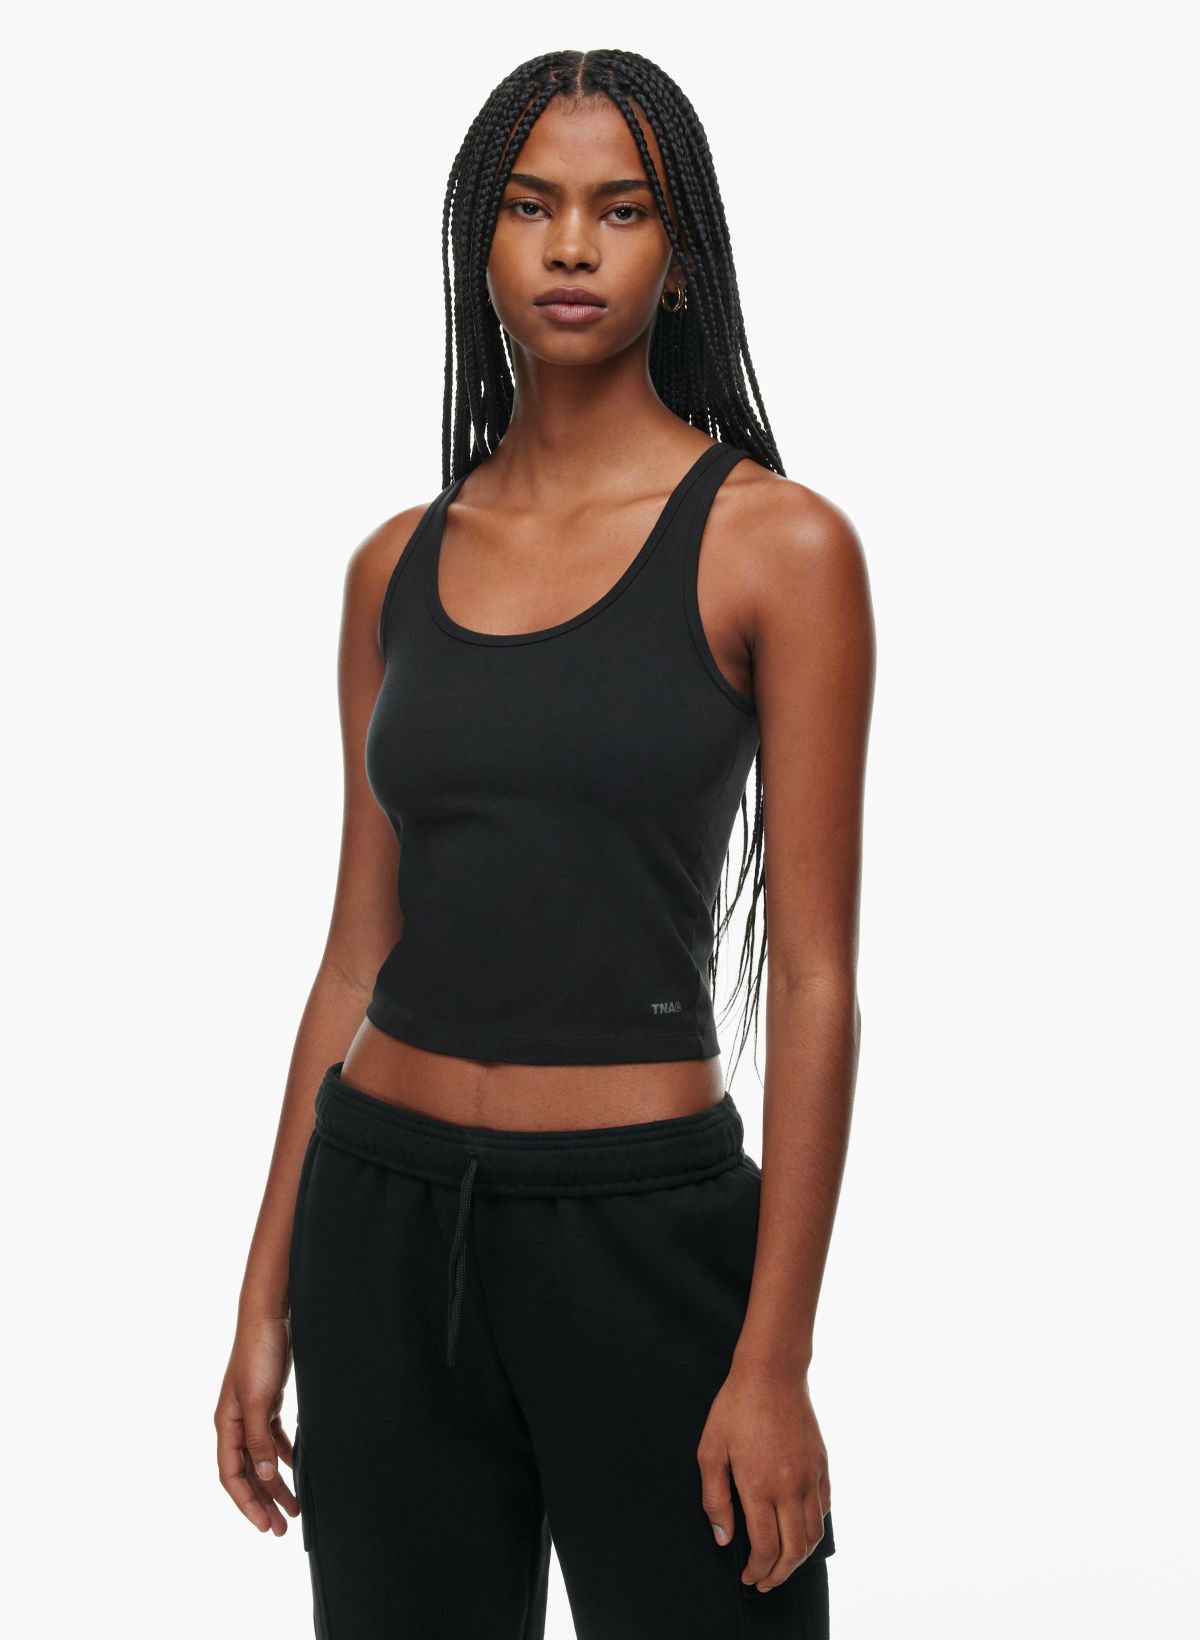 Nike Sportswear Chill Knit Tight Cami Tank Top in Black